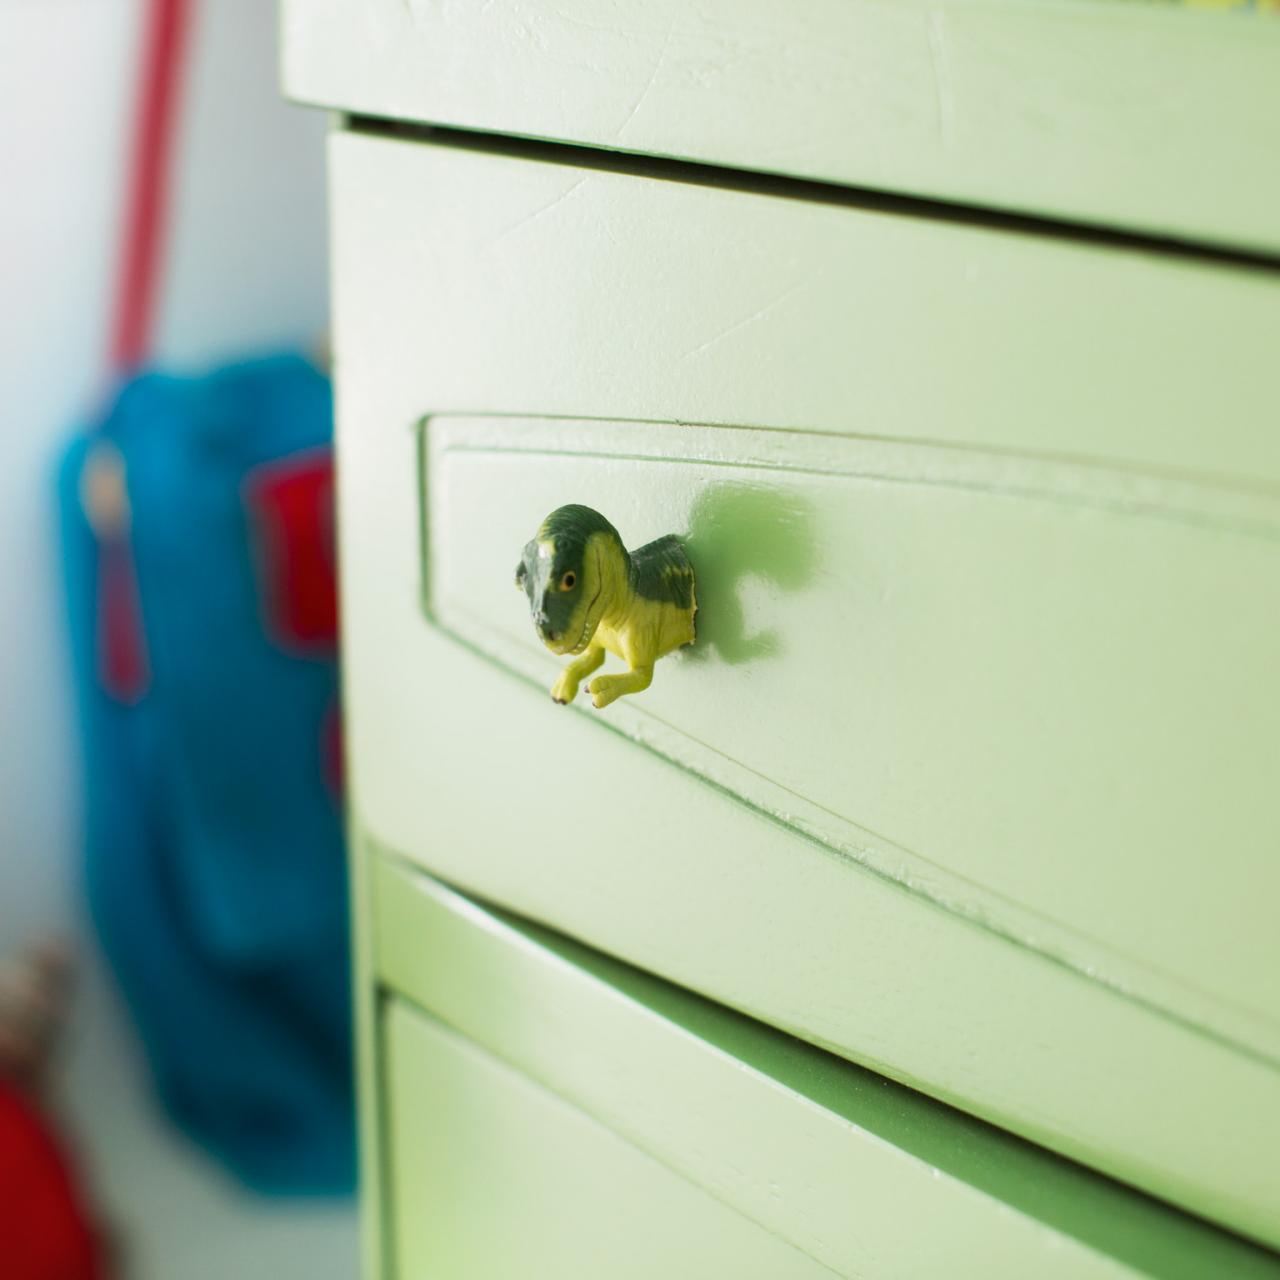 99 Clever Ways To Transform A Boring Dresser